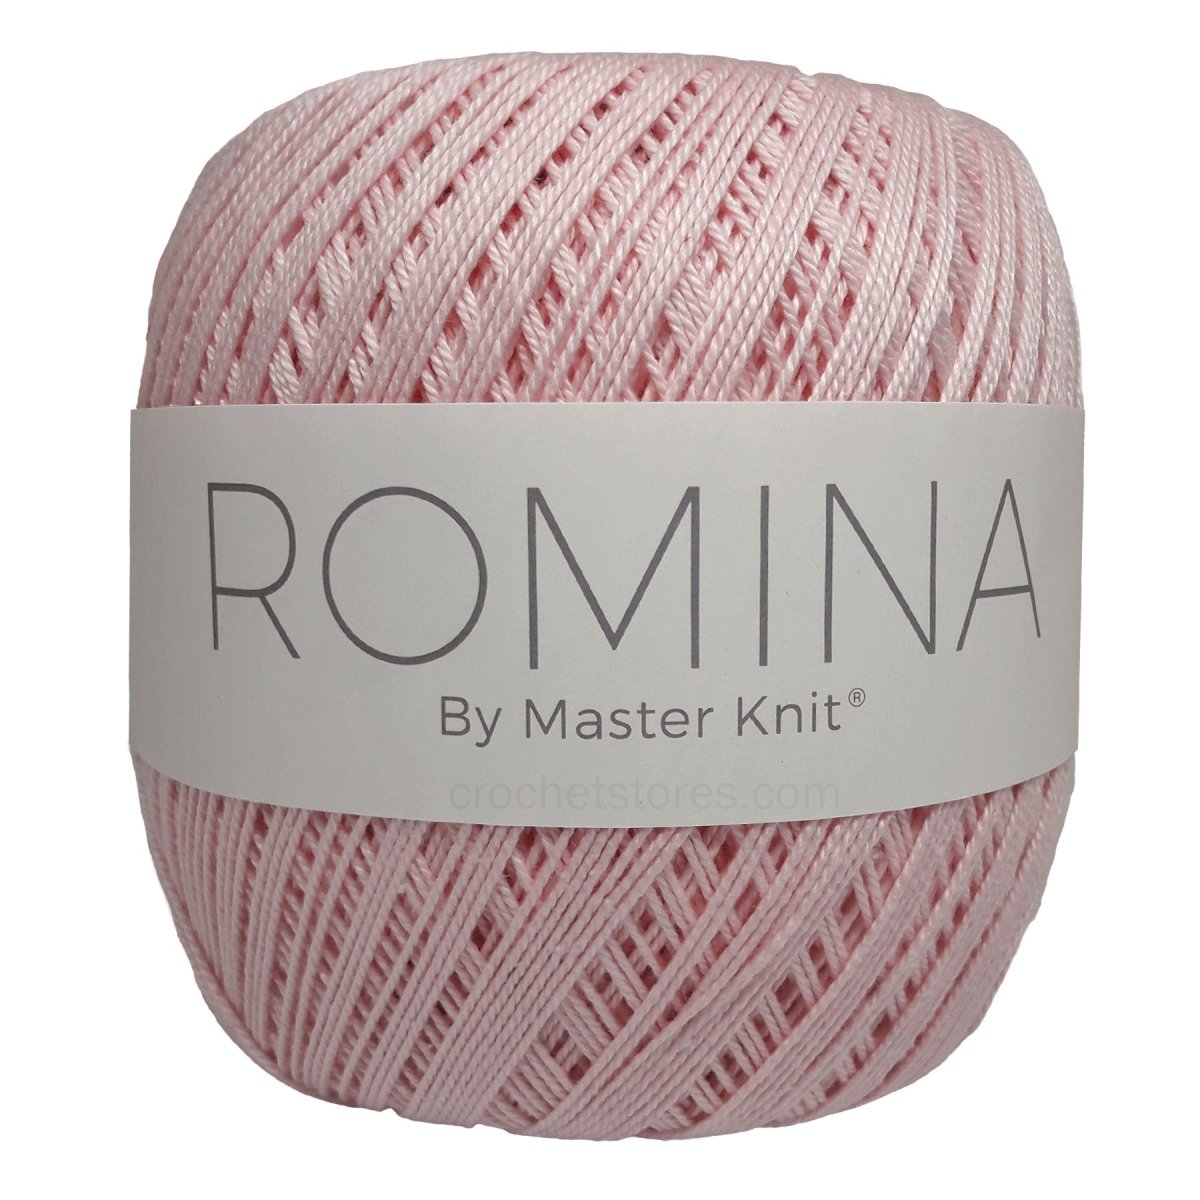 ROMINA - Crochetstores9335-682745051438708